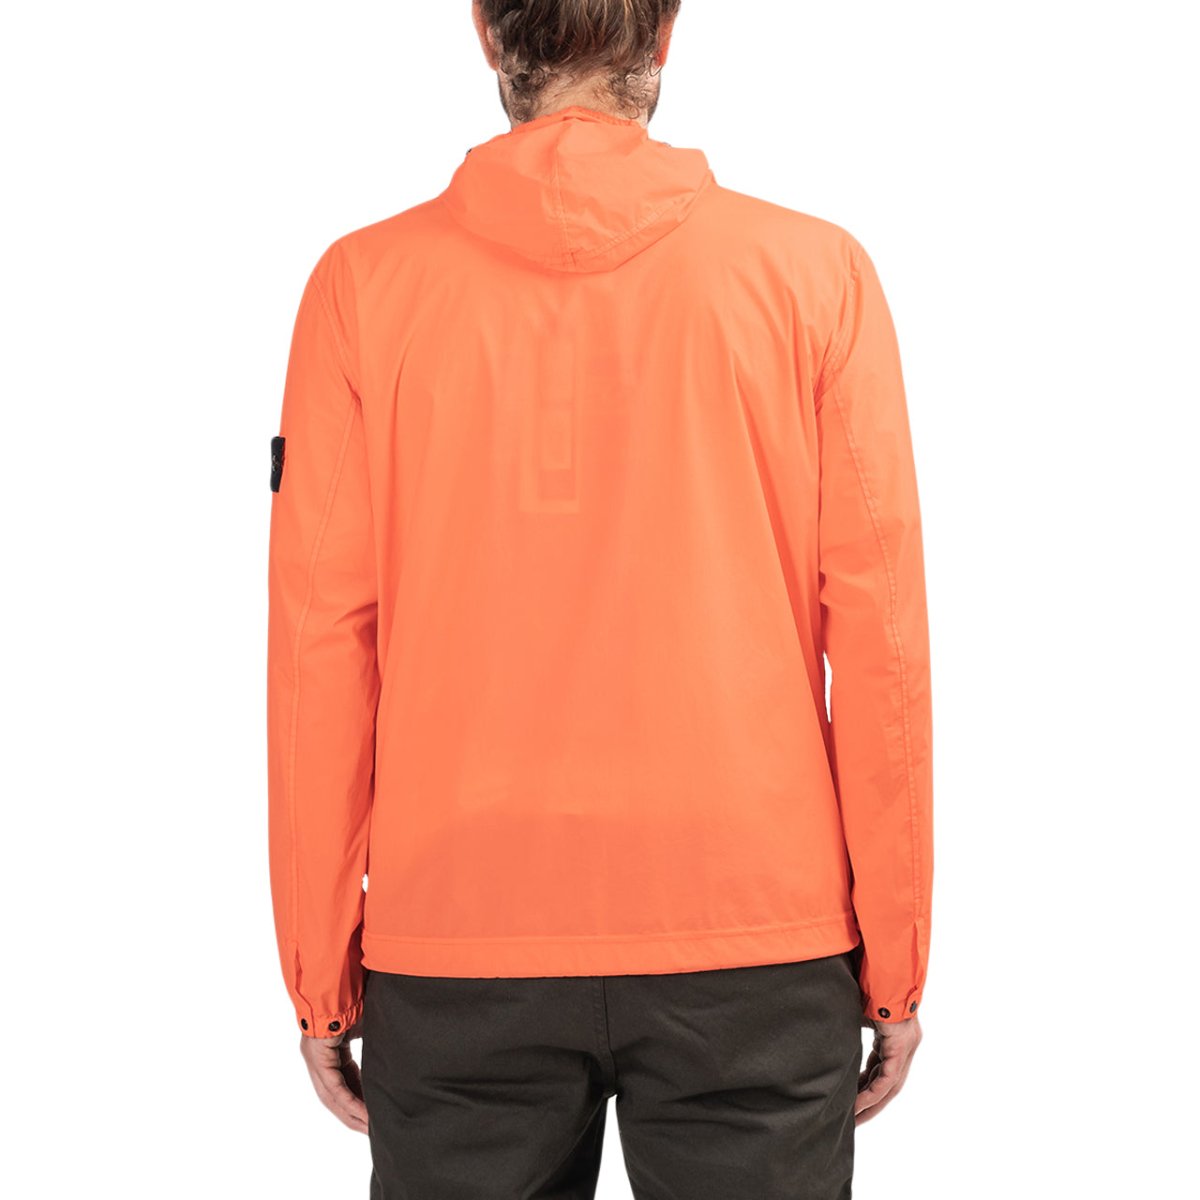 Stone Island Men's Iridescent Jacket in Orange